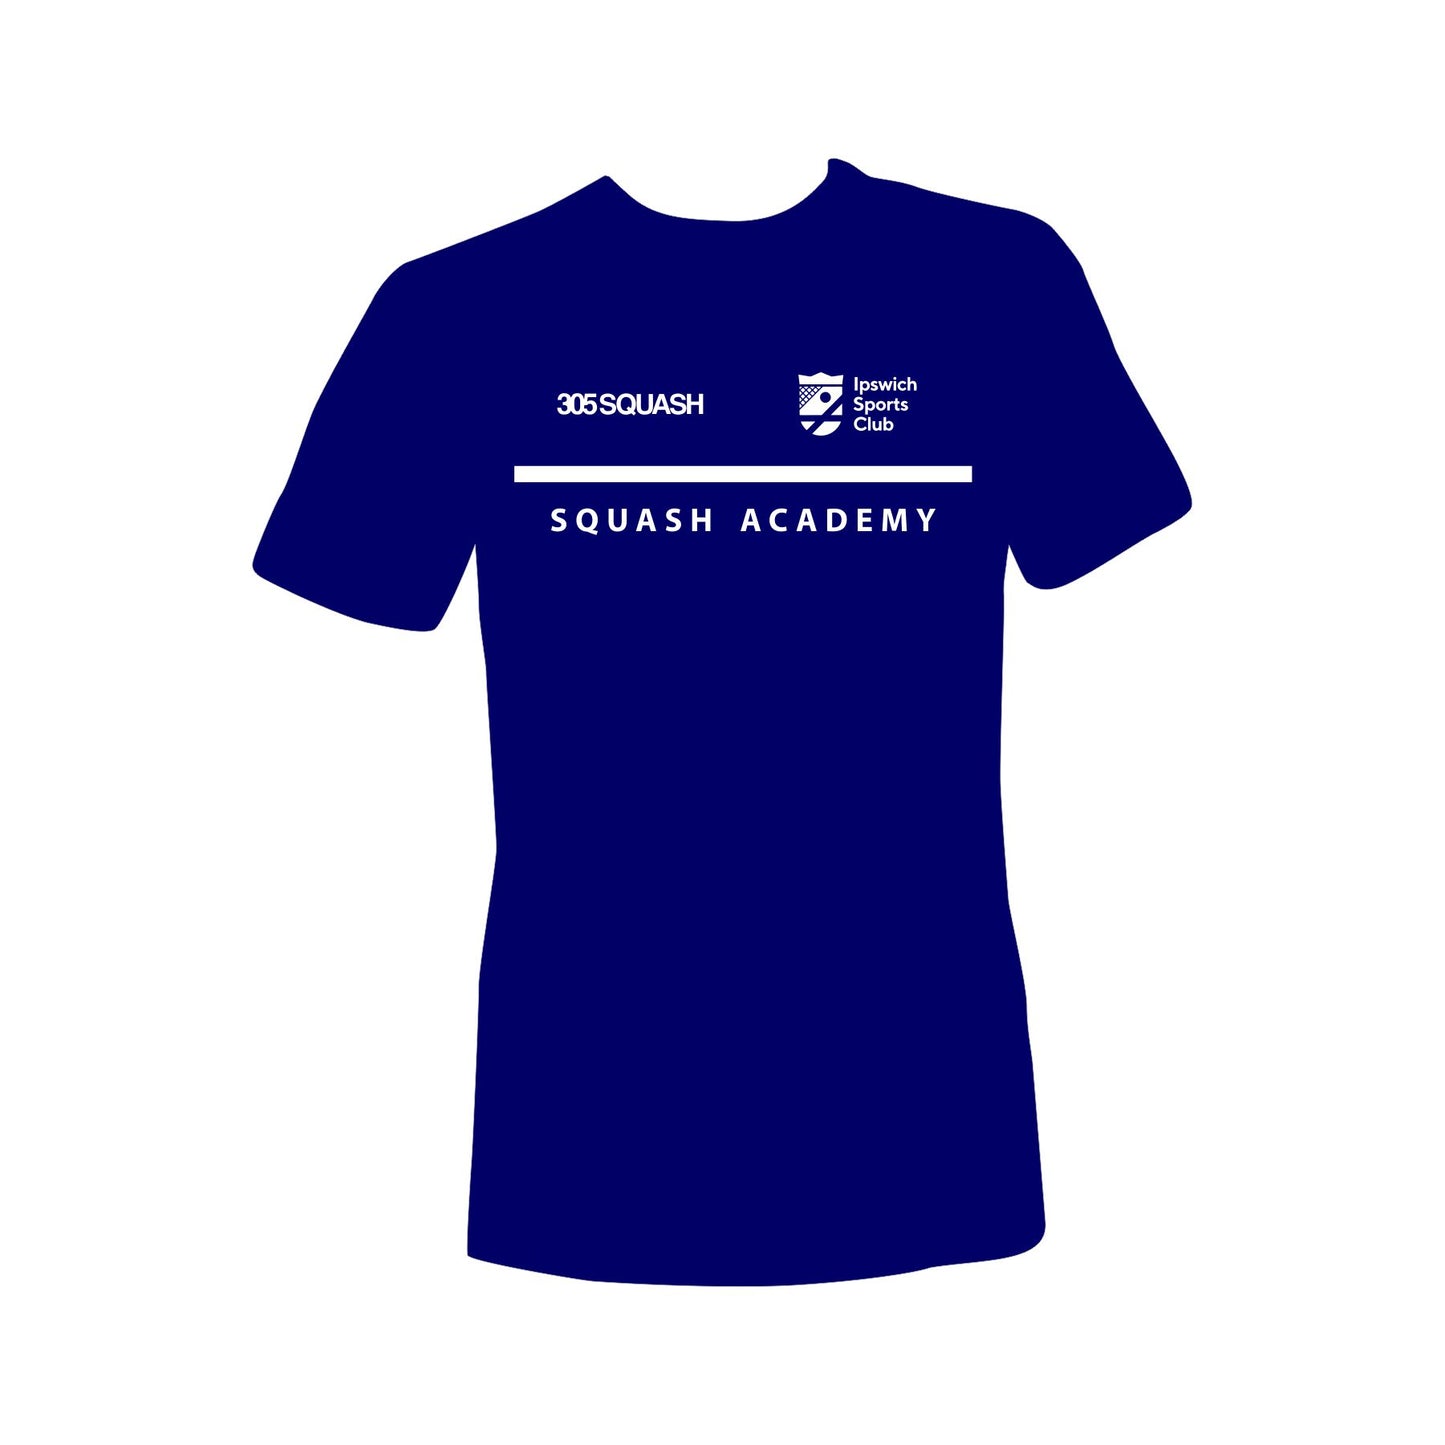 Ipswich Squash Club Academy Action T